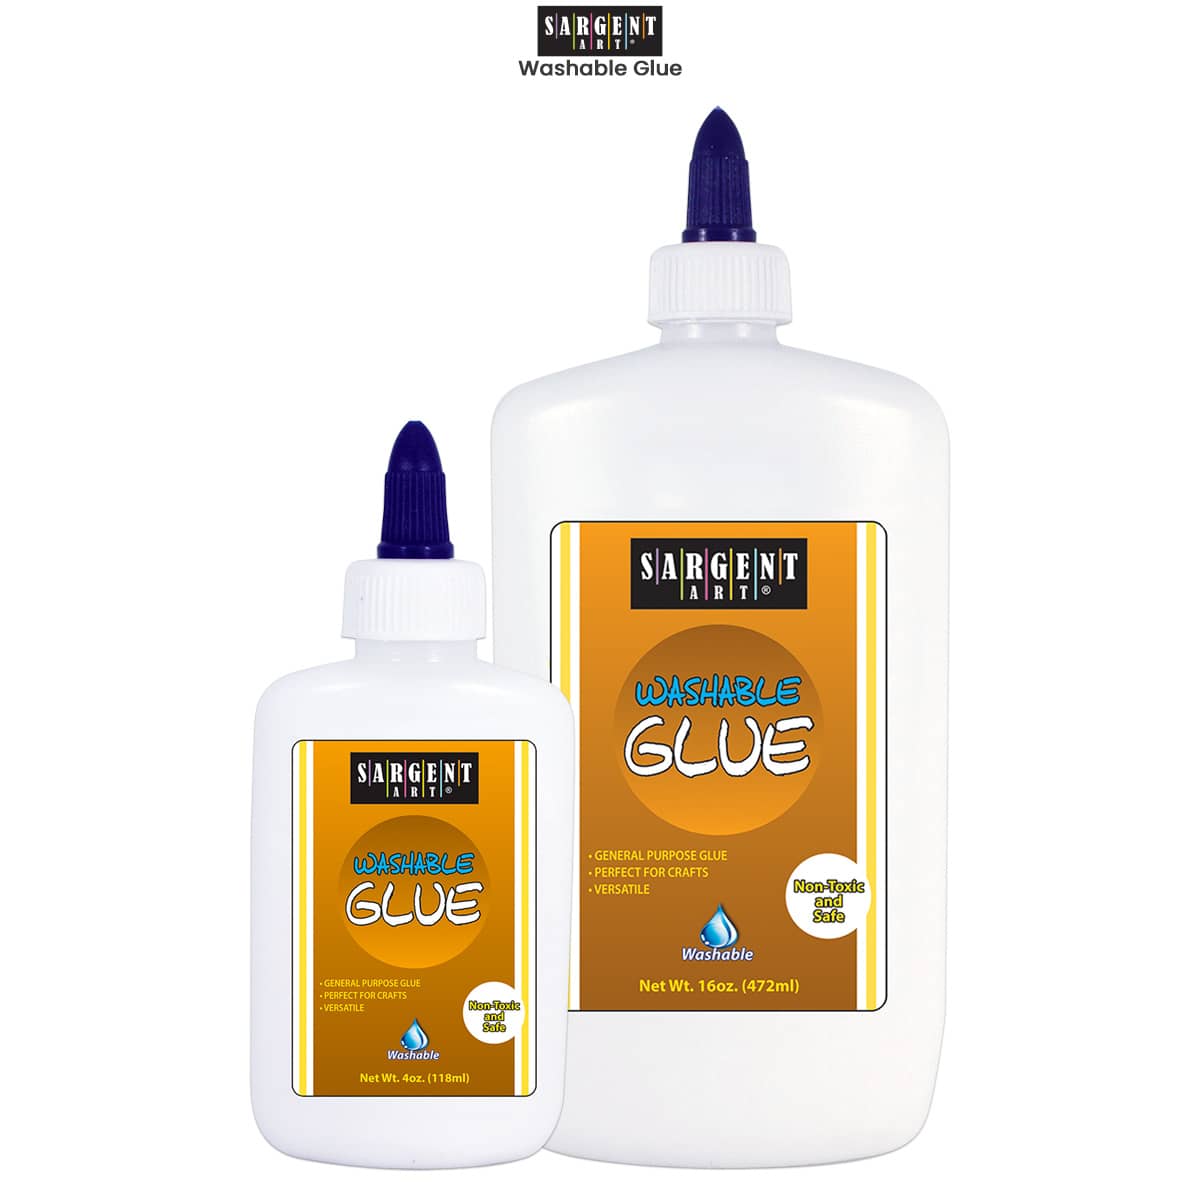 Clear Glue, 9 Oz. Elmers Colored Glue, 4 Ct. 5 Oz. India